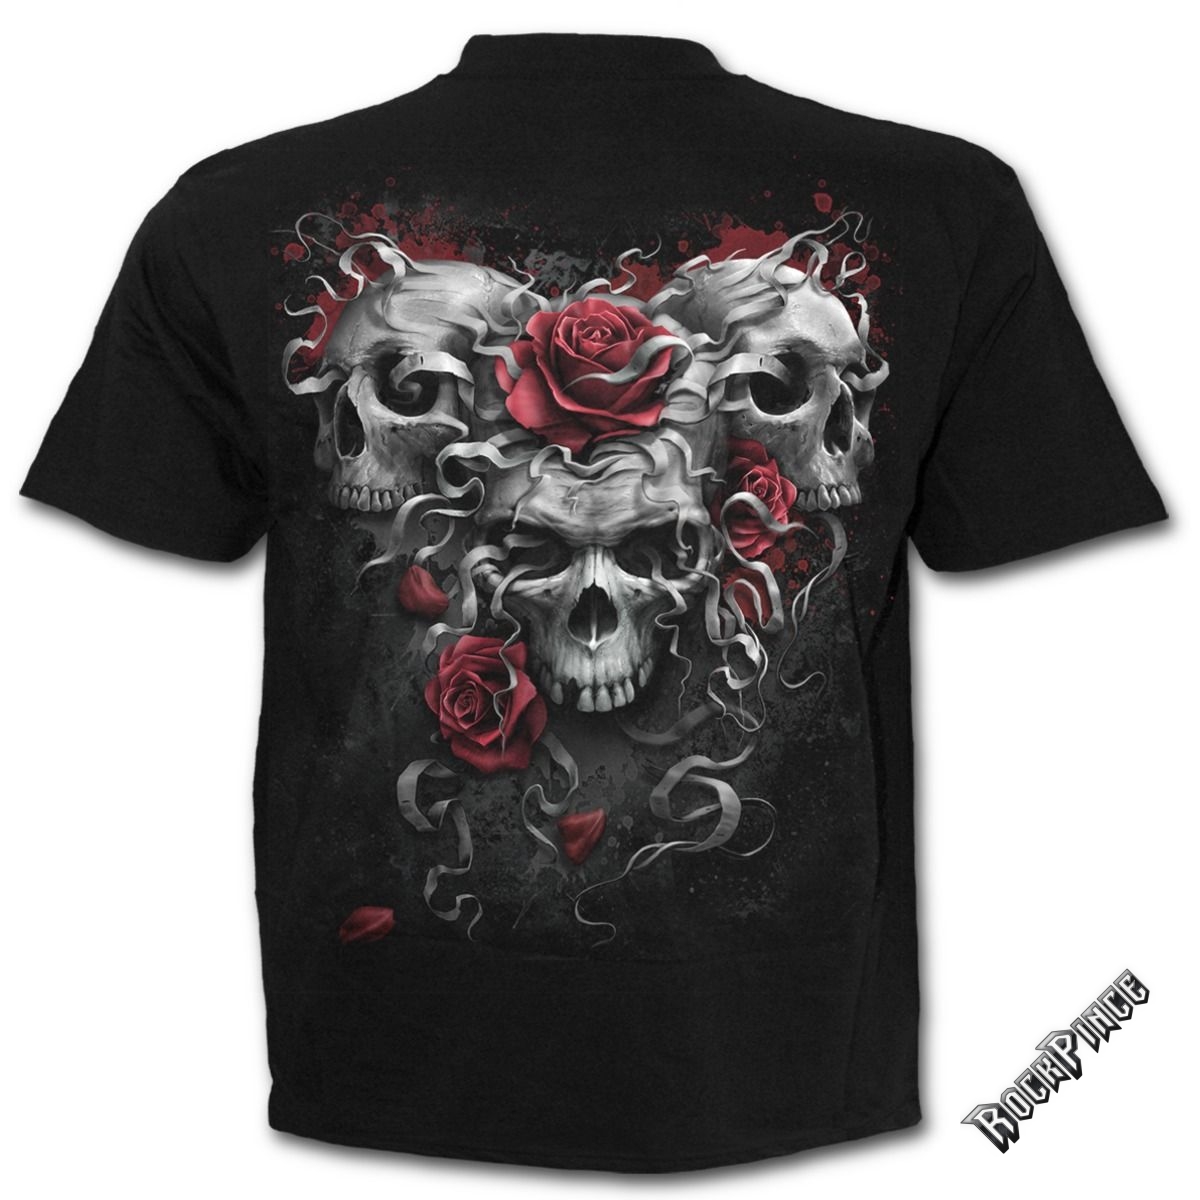 SKULLS N' ROSES - T-Shirt Black - E024M101